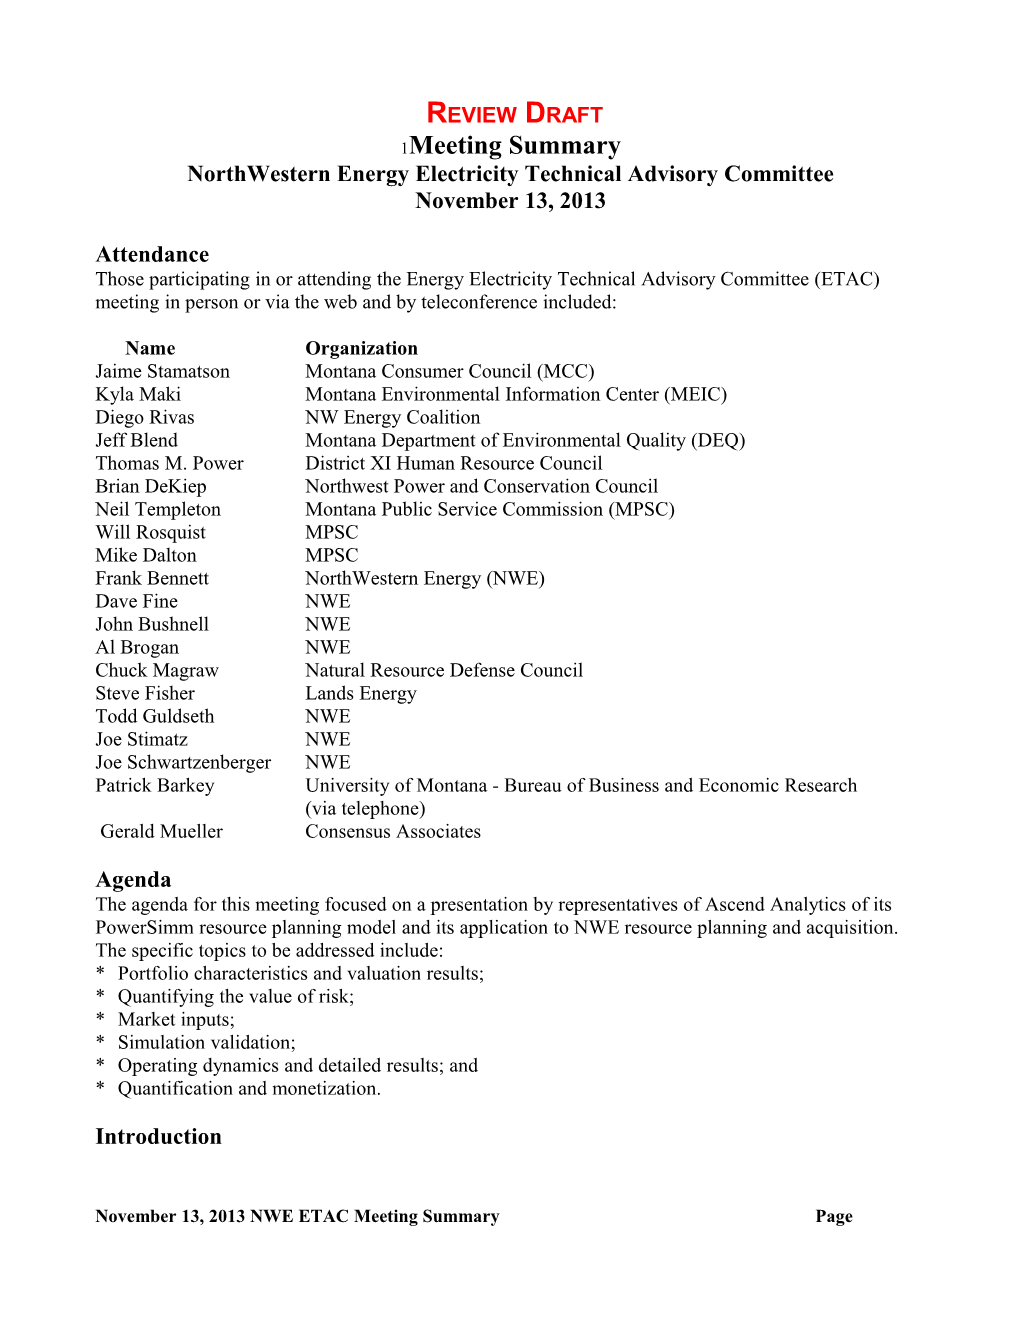 Northwestern Energy Electricity Technical Advisory Committee